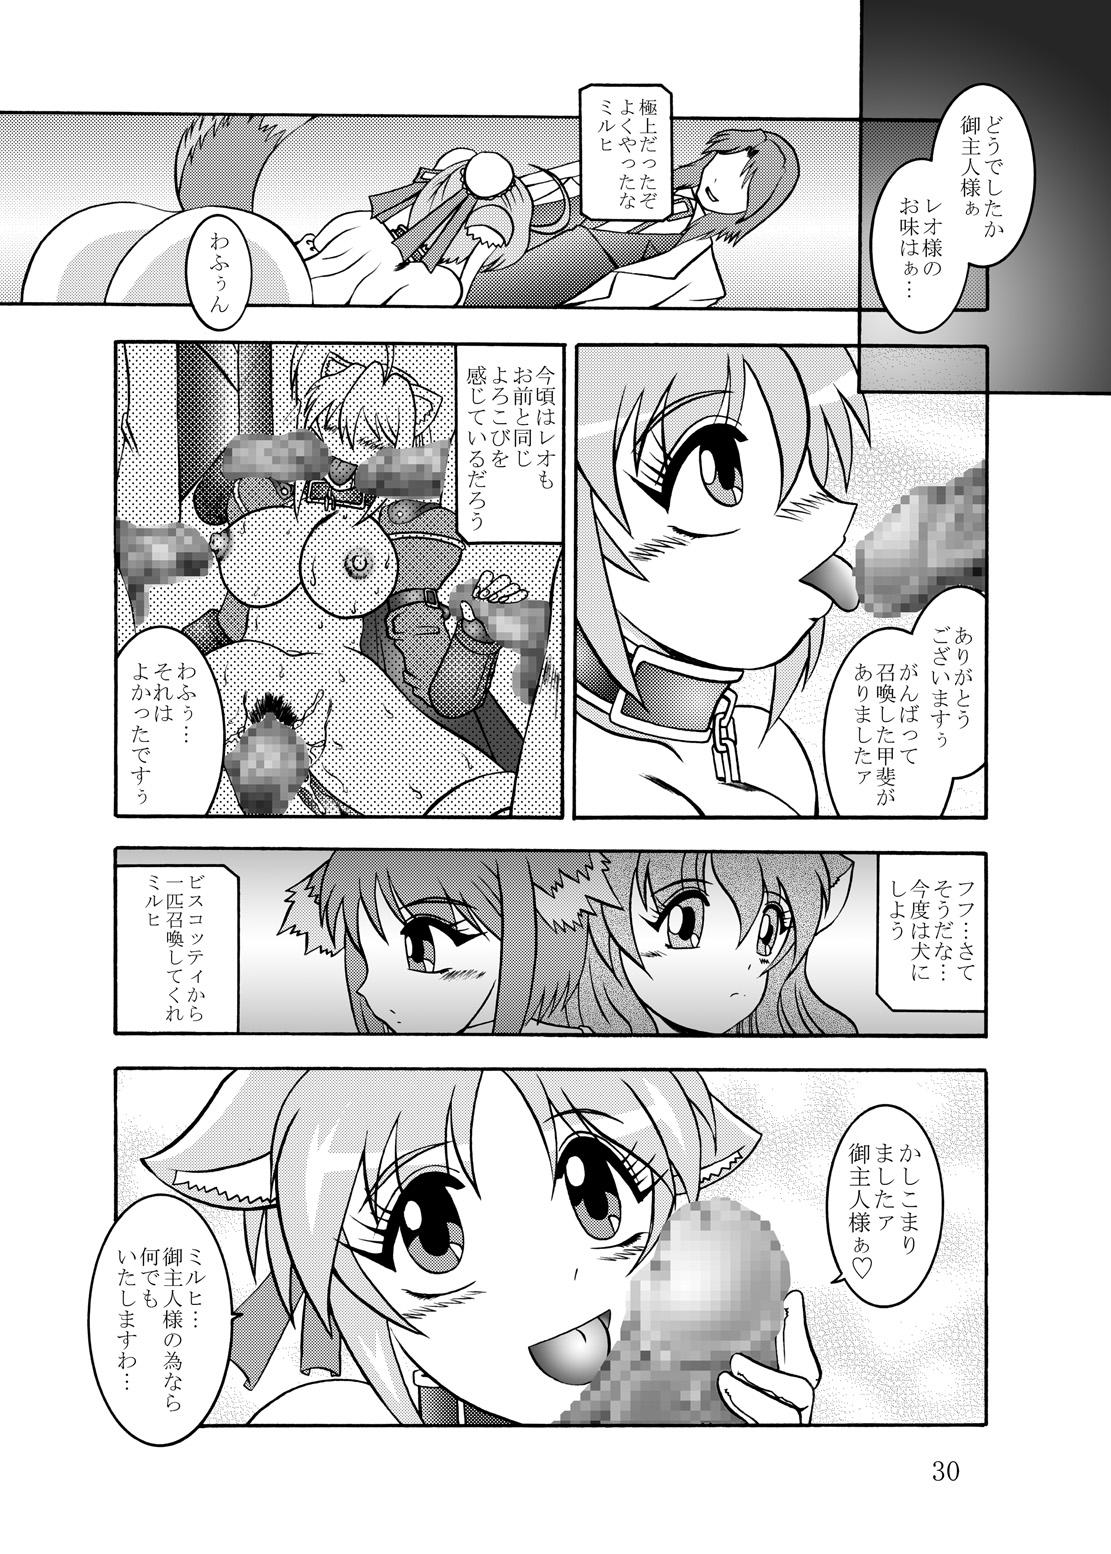 Family Sex 淫欲改造:レオンミシェリ・ガレット・デ・ロワ - Dog days Bedroom - Page 29